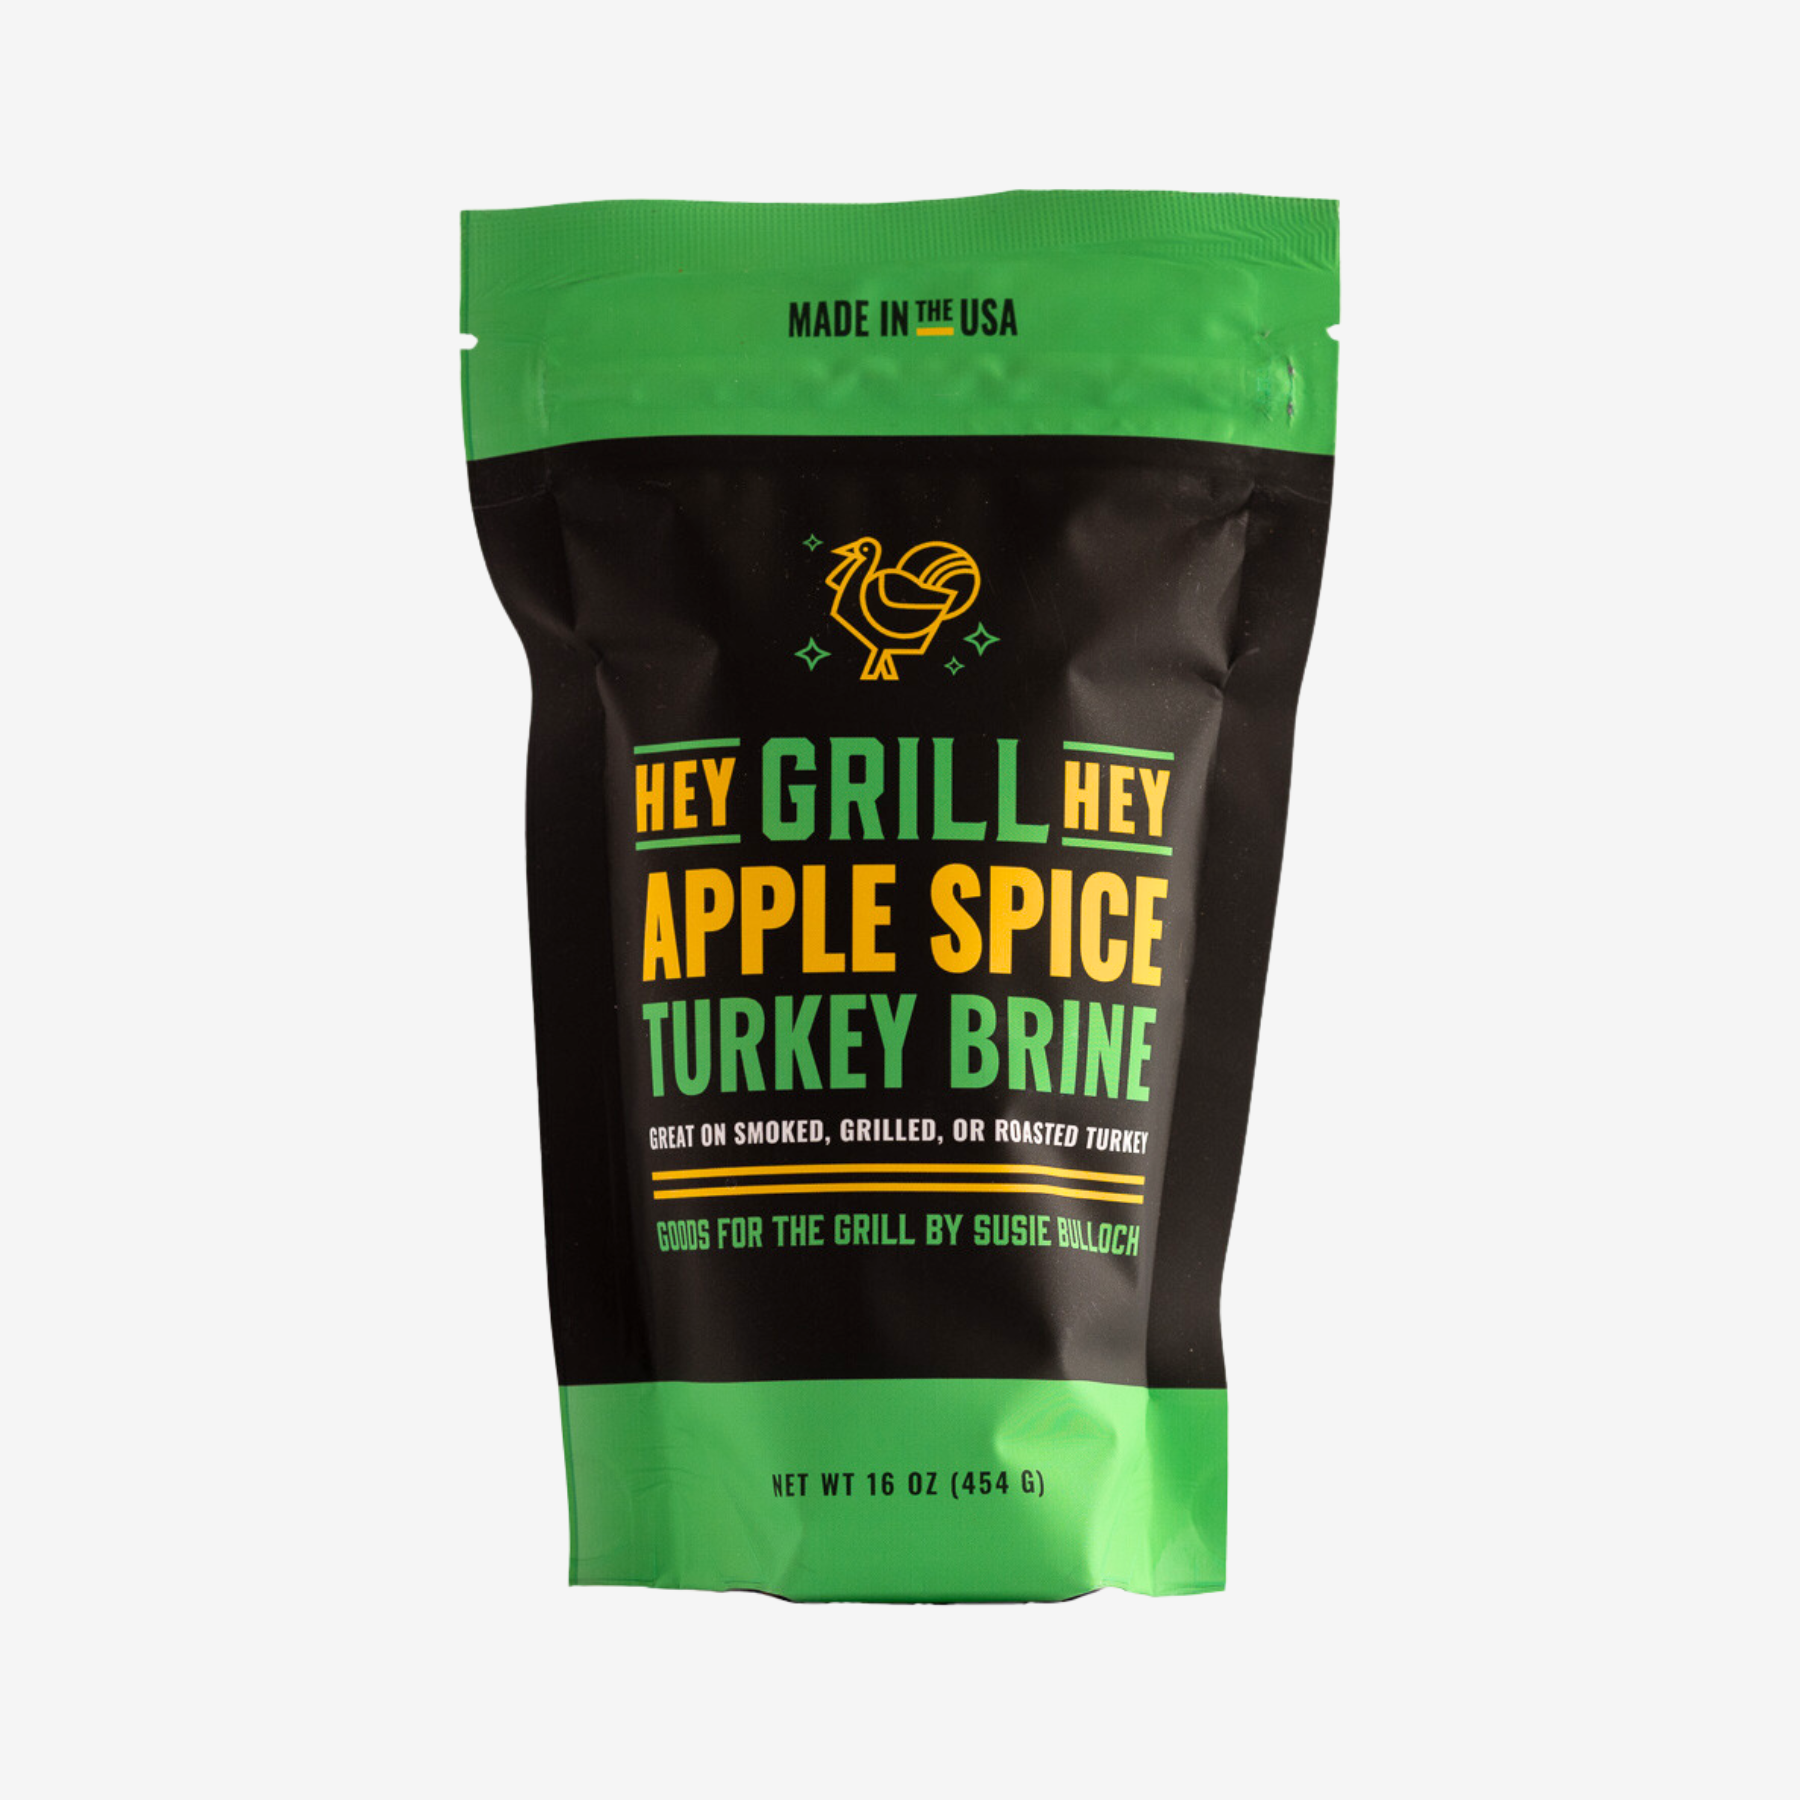 Apple Spice Turkey Brine